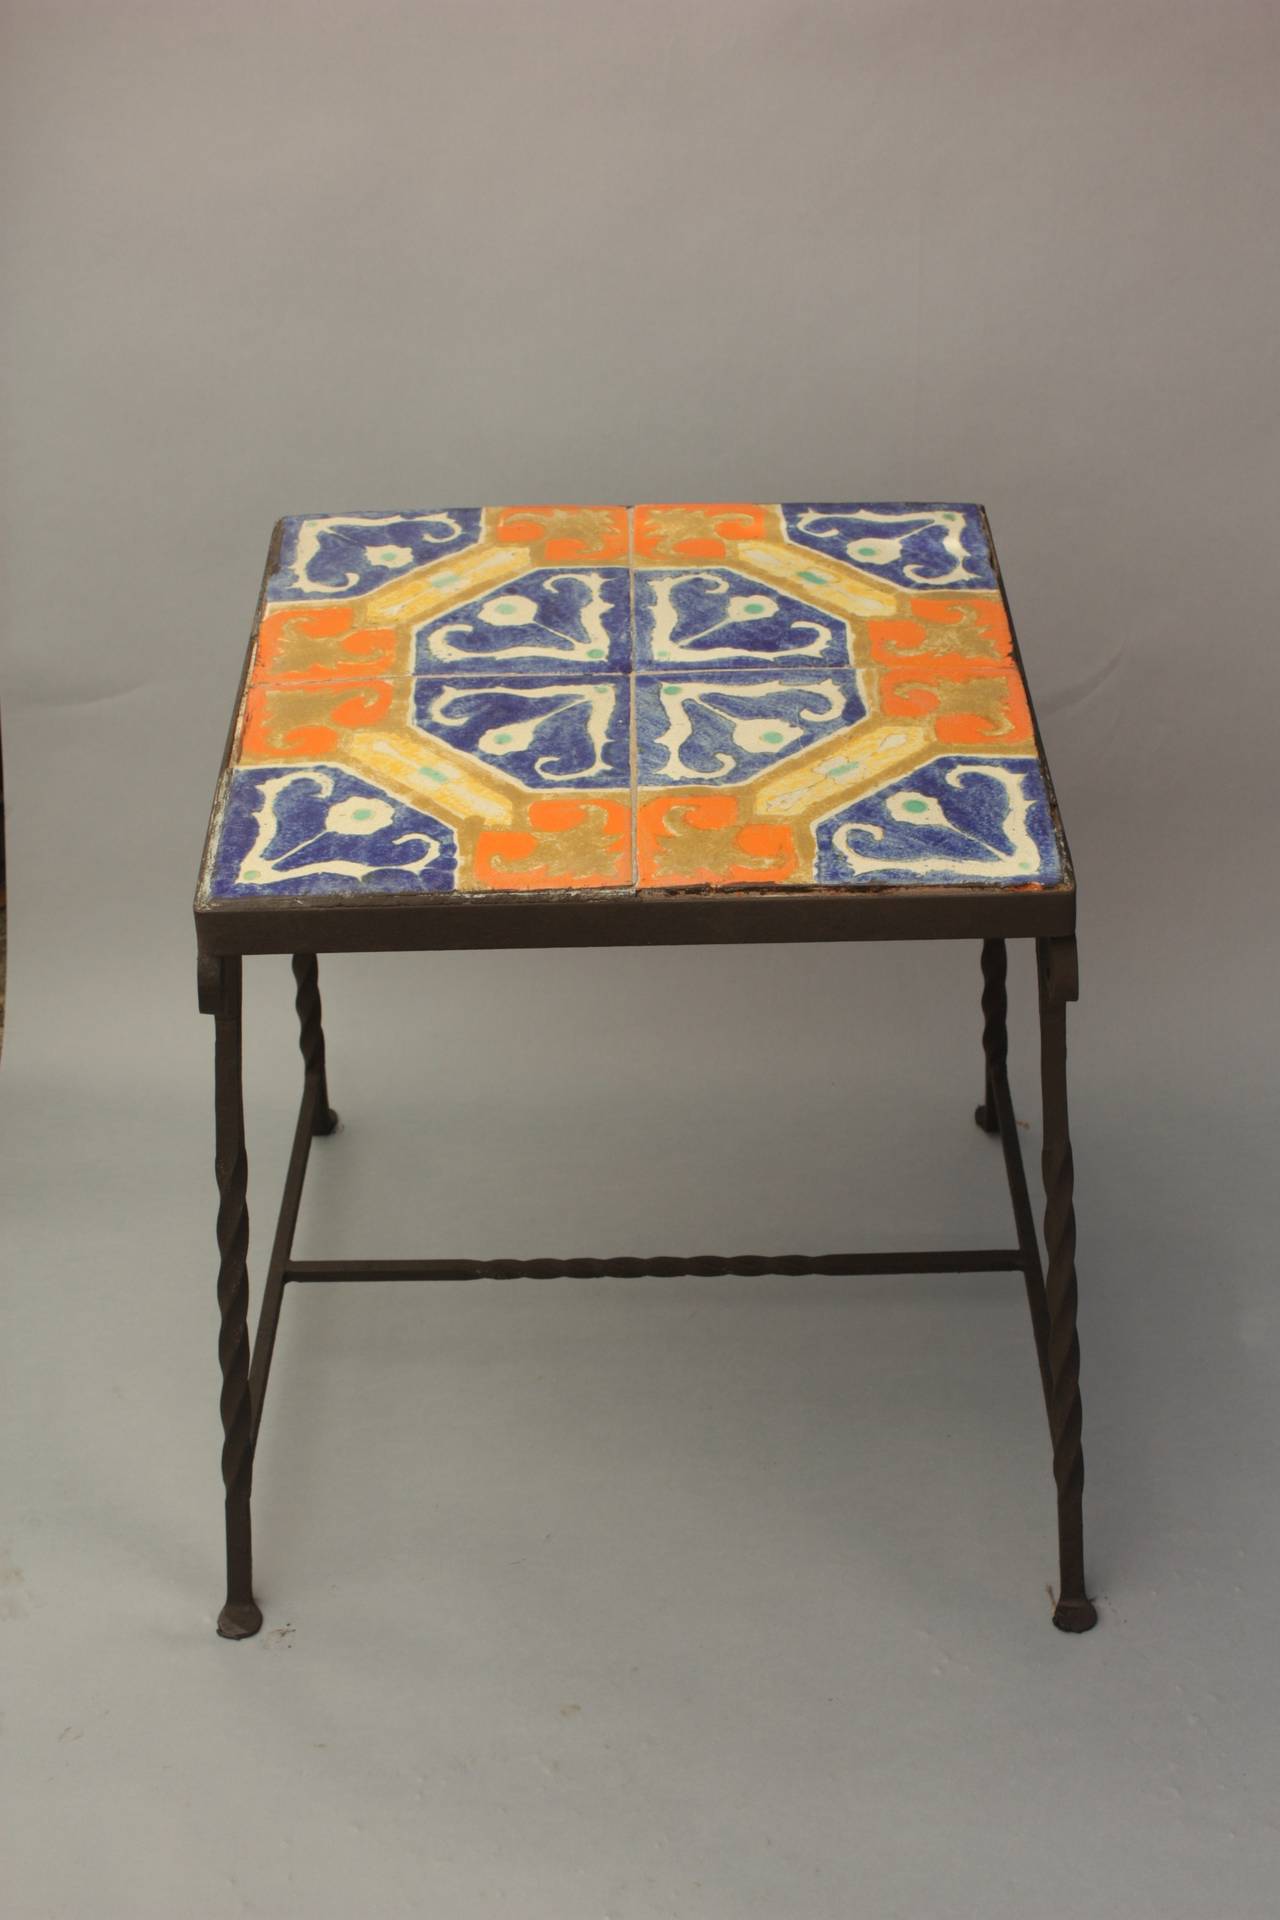 Circa 1930's iron tile table with vibrant D&M tiles. 19.25